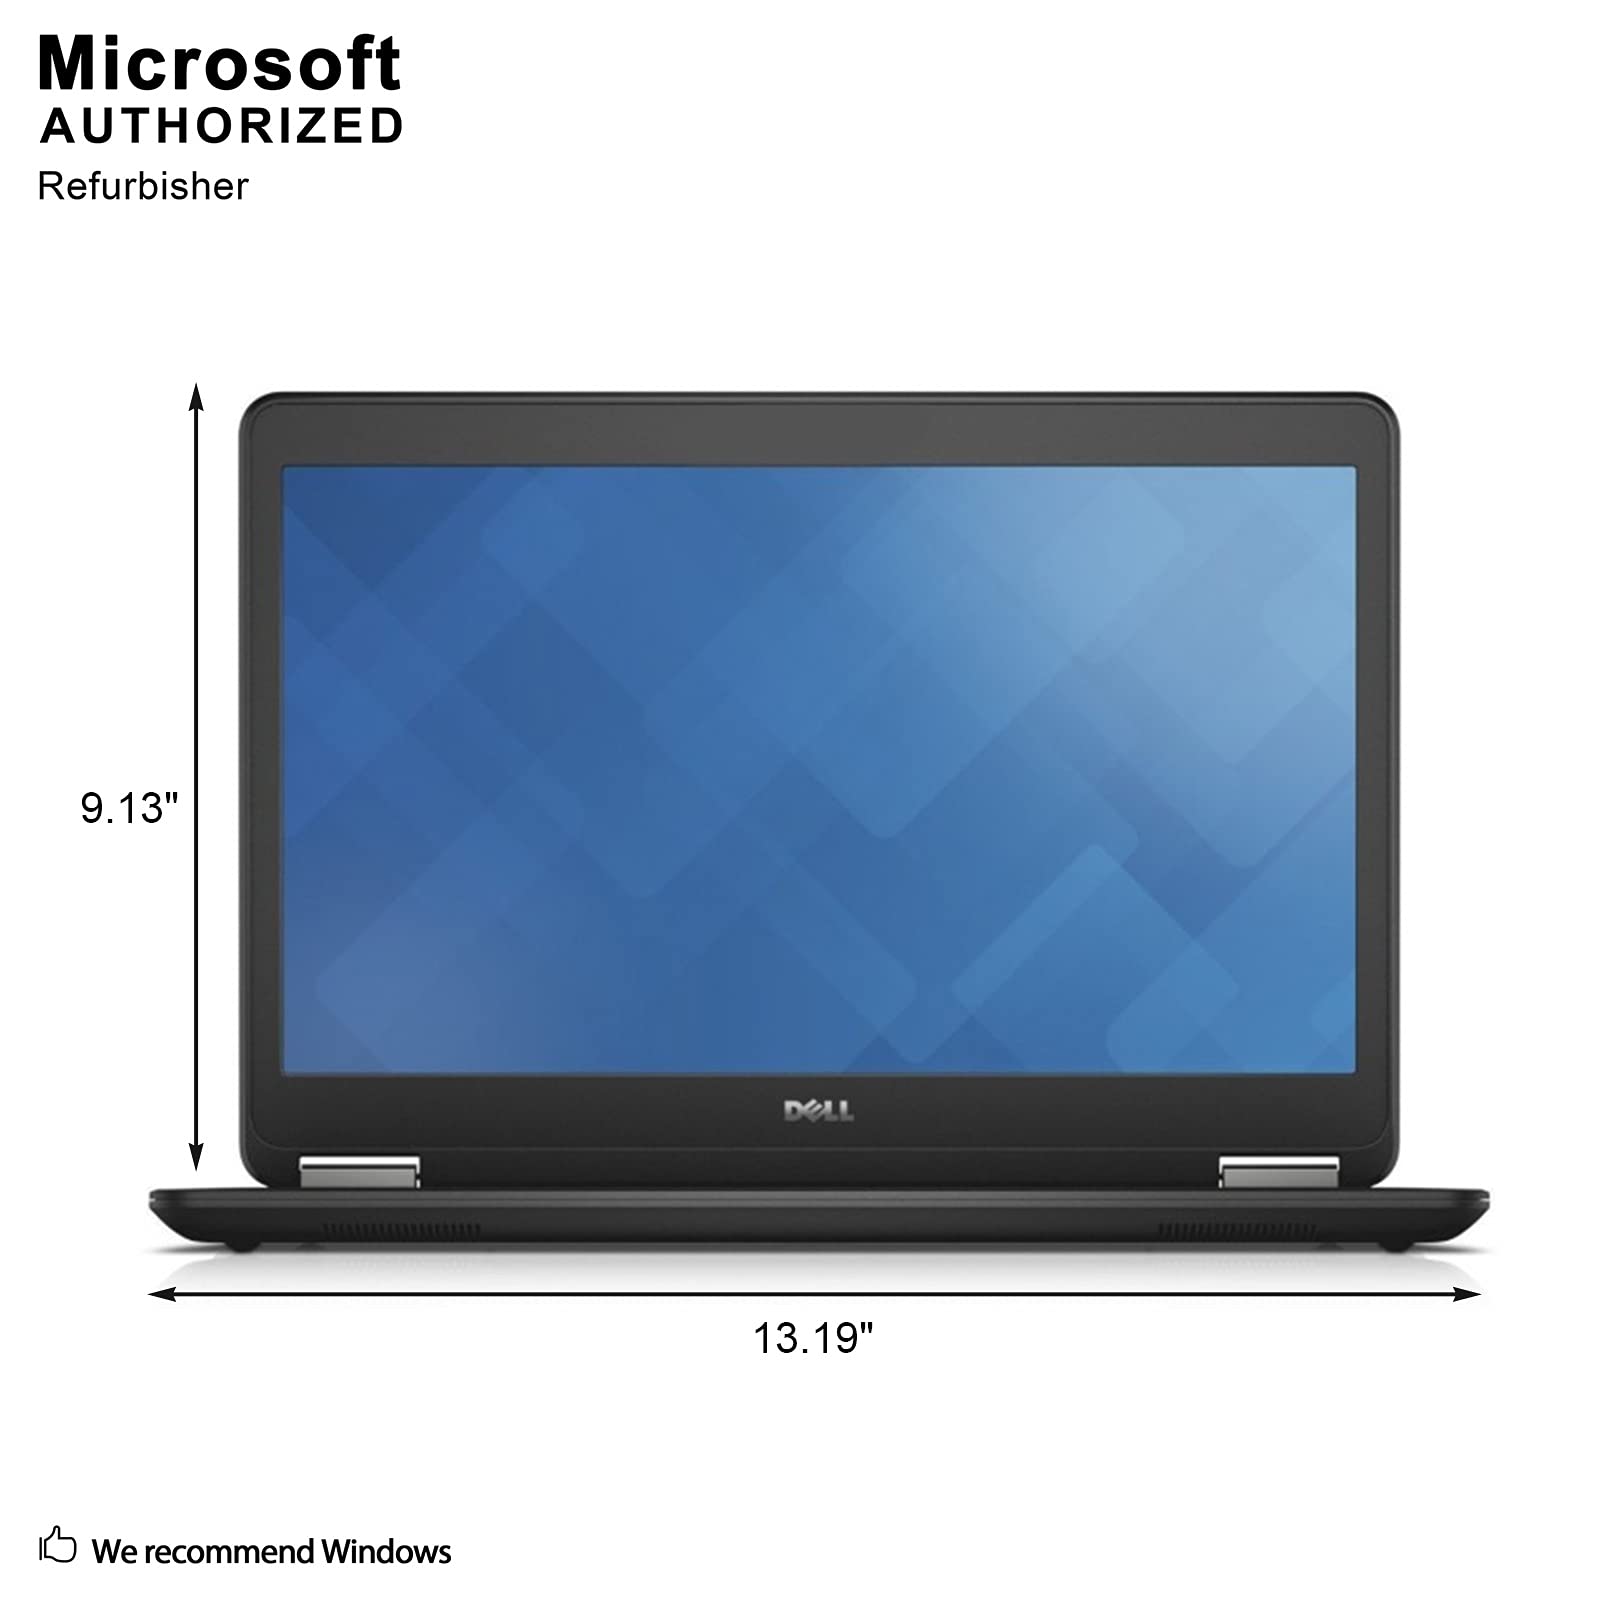 Mua Dell Latitude 14 7000 Series E7470 Ultrabook,  HD Anti-Glare  LCD, Intel Core i7-6600U, 8 GB DDR4, 256 GB SSD, Windows 10 Pro (Renewed)  trên Amazon Mỹ chính hãng 2023 | Fado